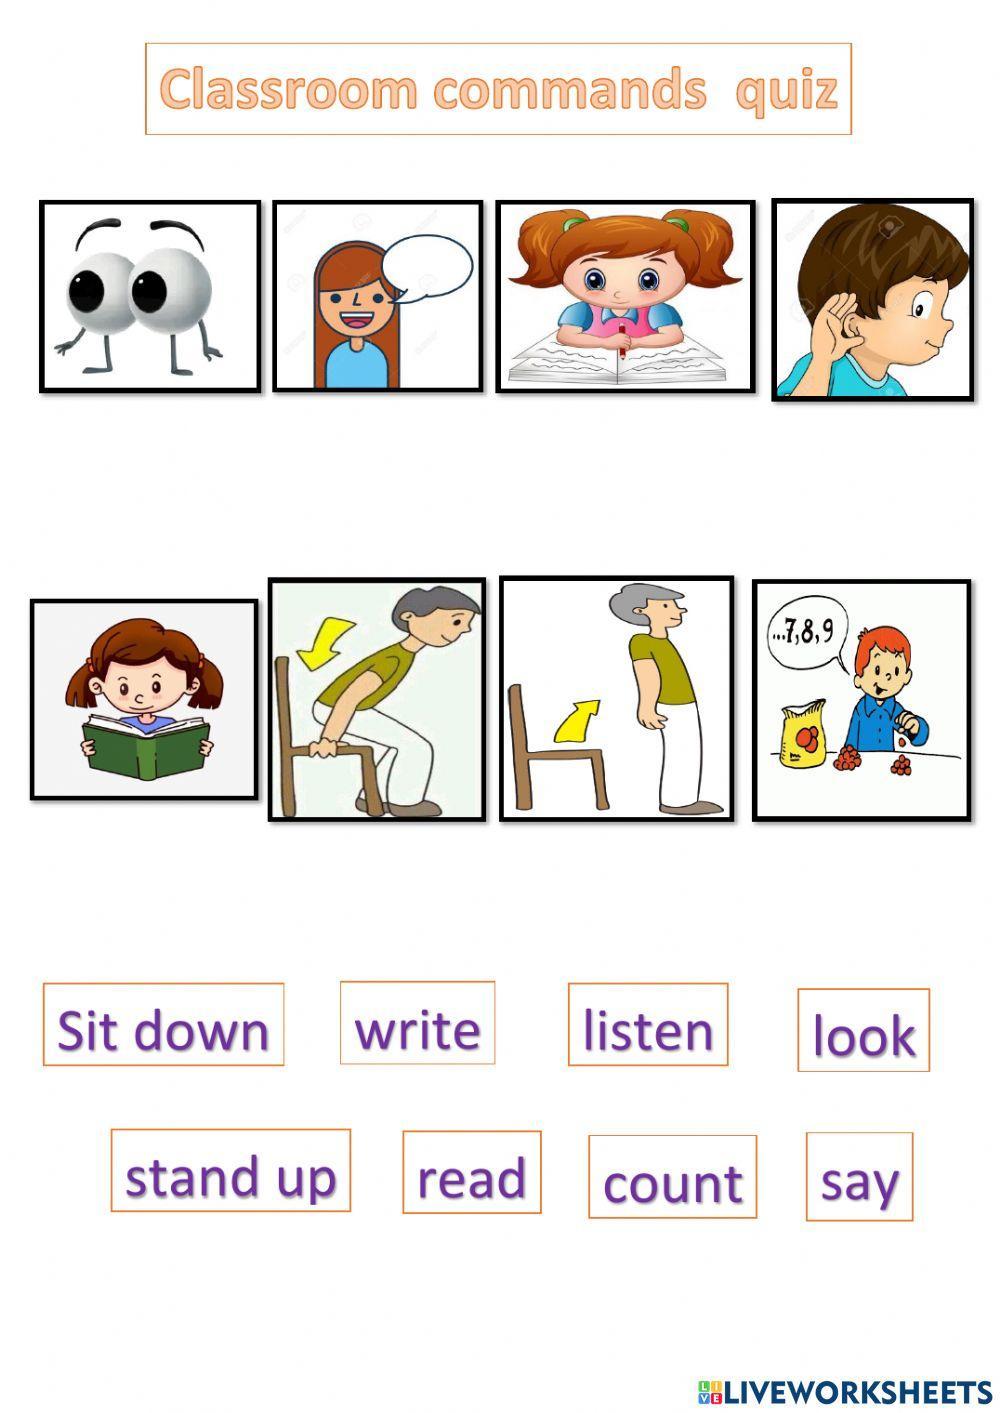 Classroom commands (2nd grade)